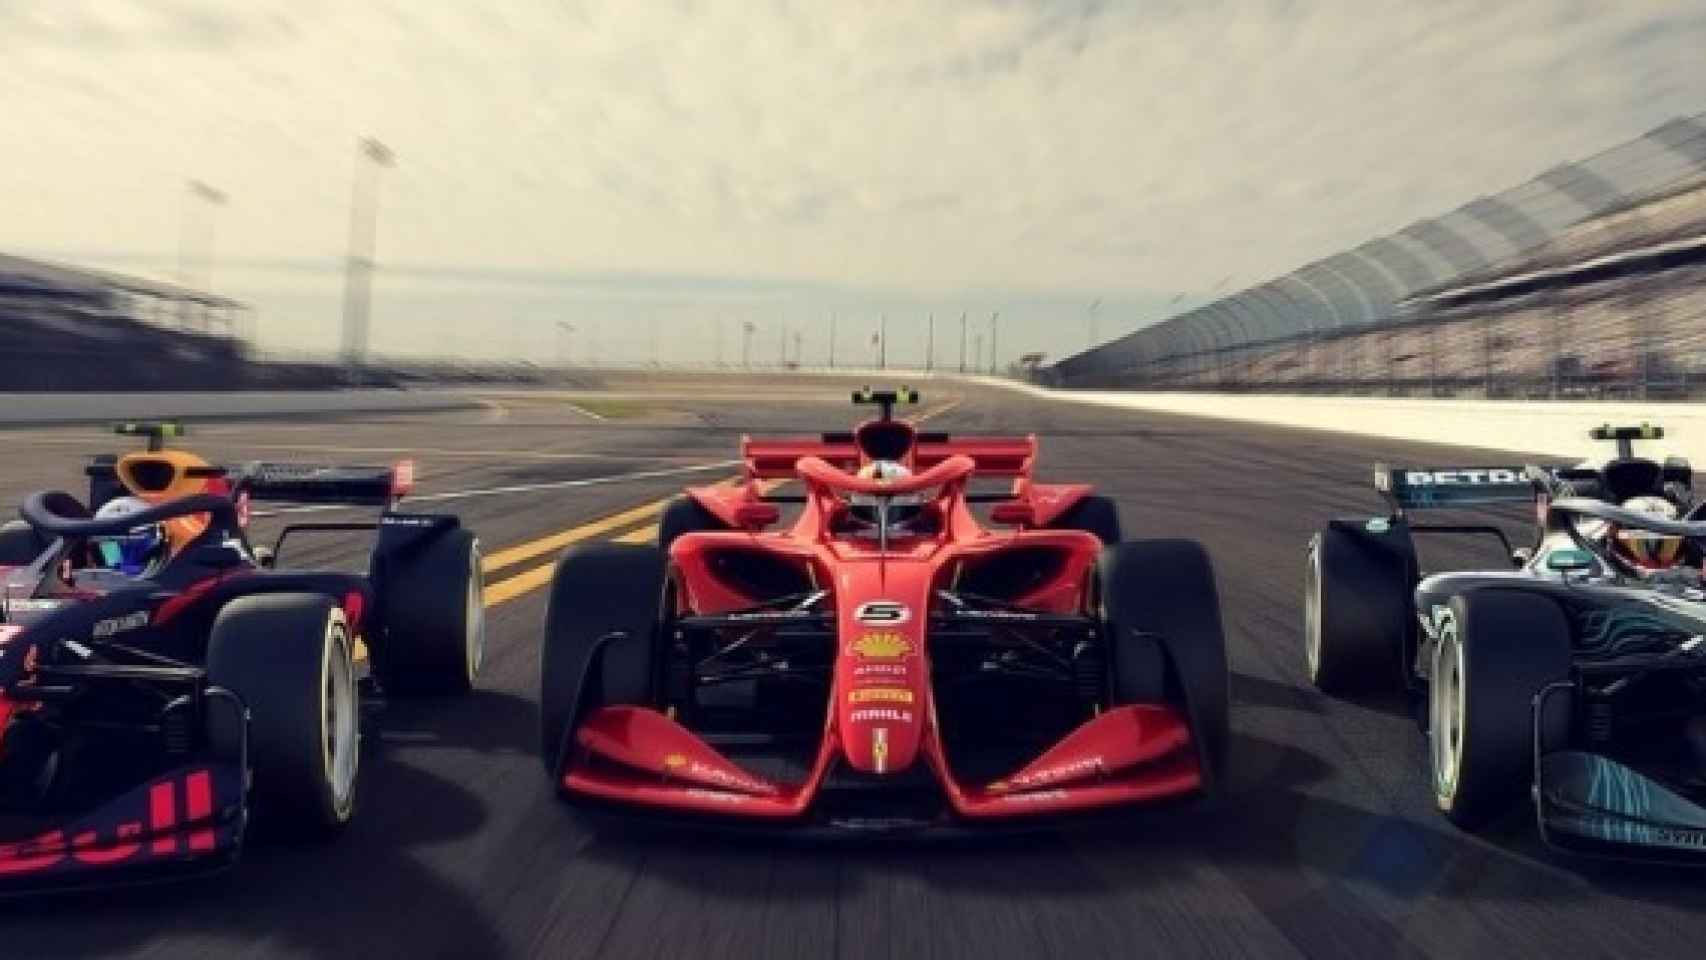 Fórmula 1: ¿Guiño de Alonso a Ferrari?: el asturiano se acuerda de